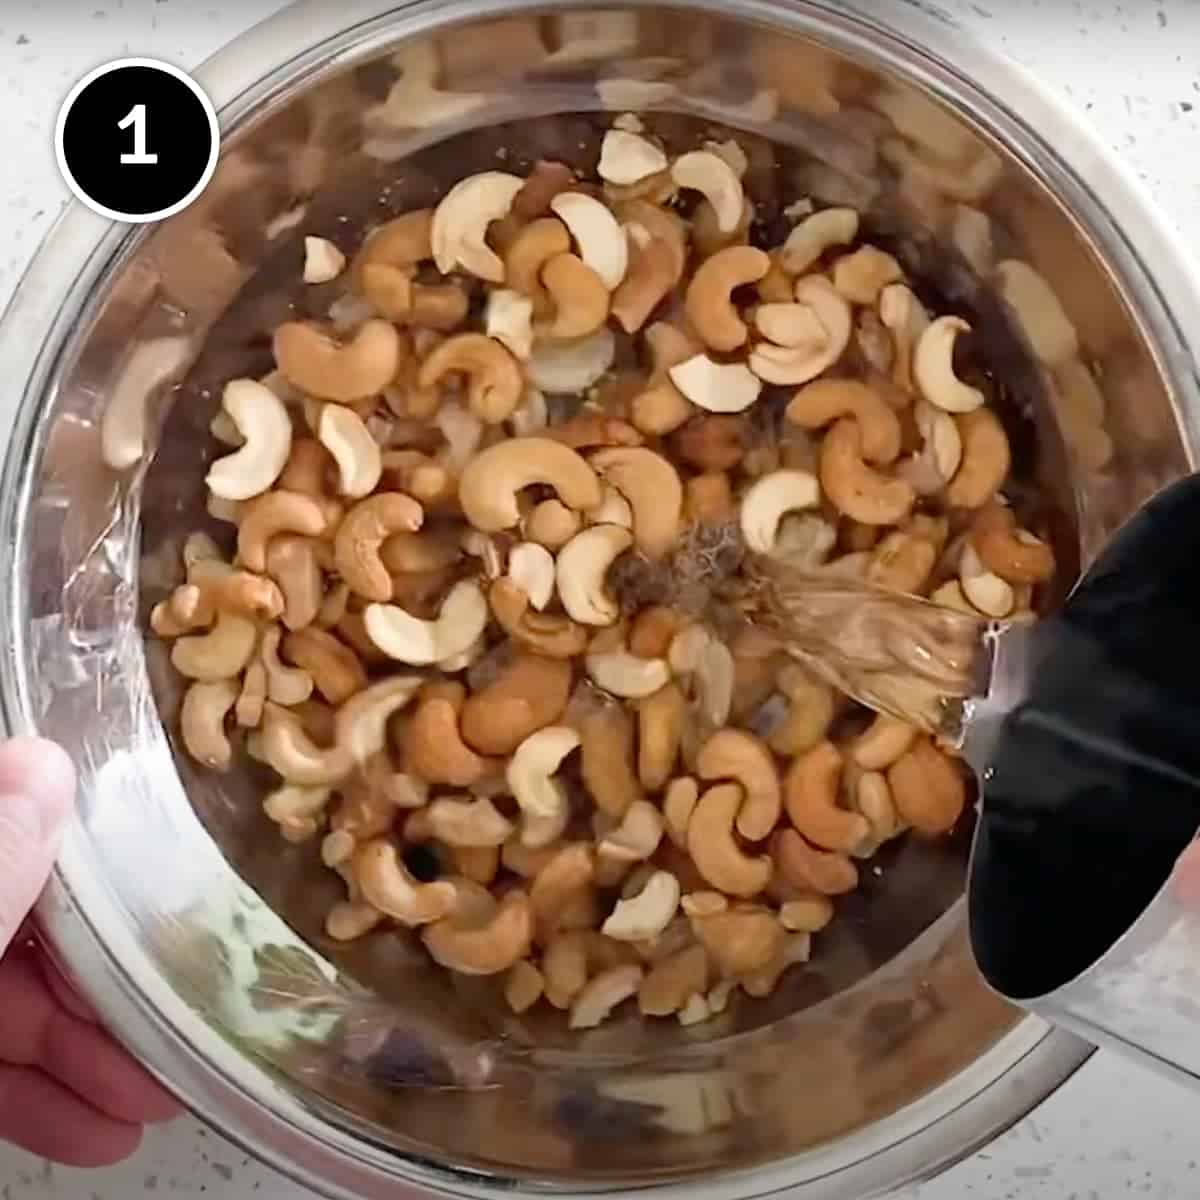 Soaking cashew nuts